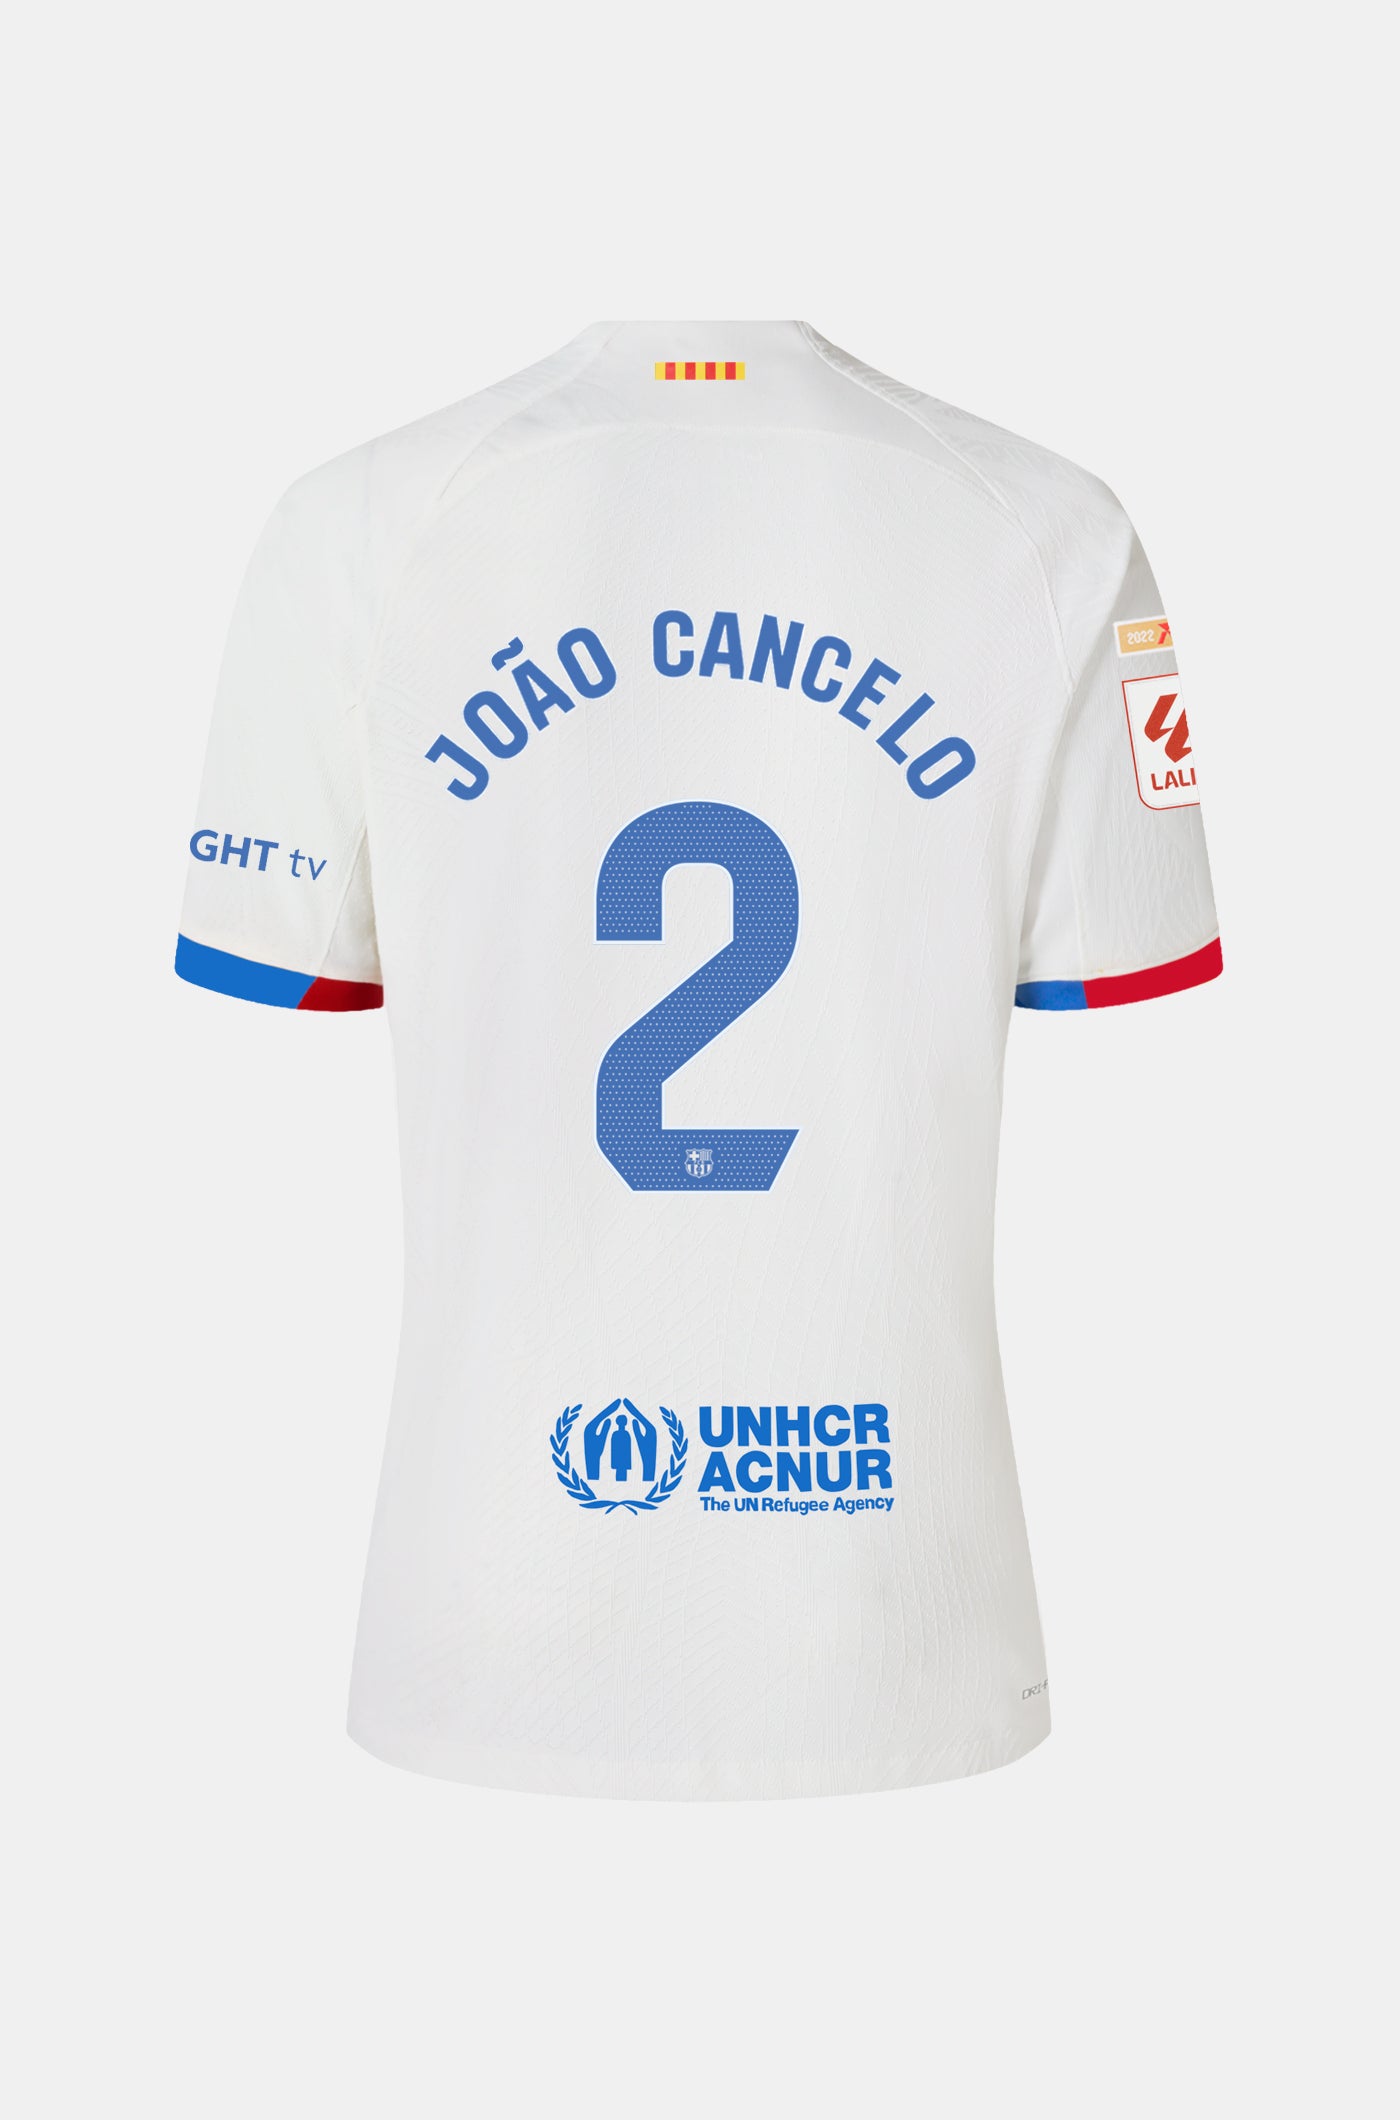 LFP FC Barcelona away shirt 23/24 Player’s Edition  - JOÃO CANCELO